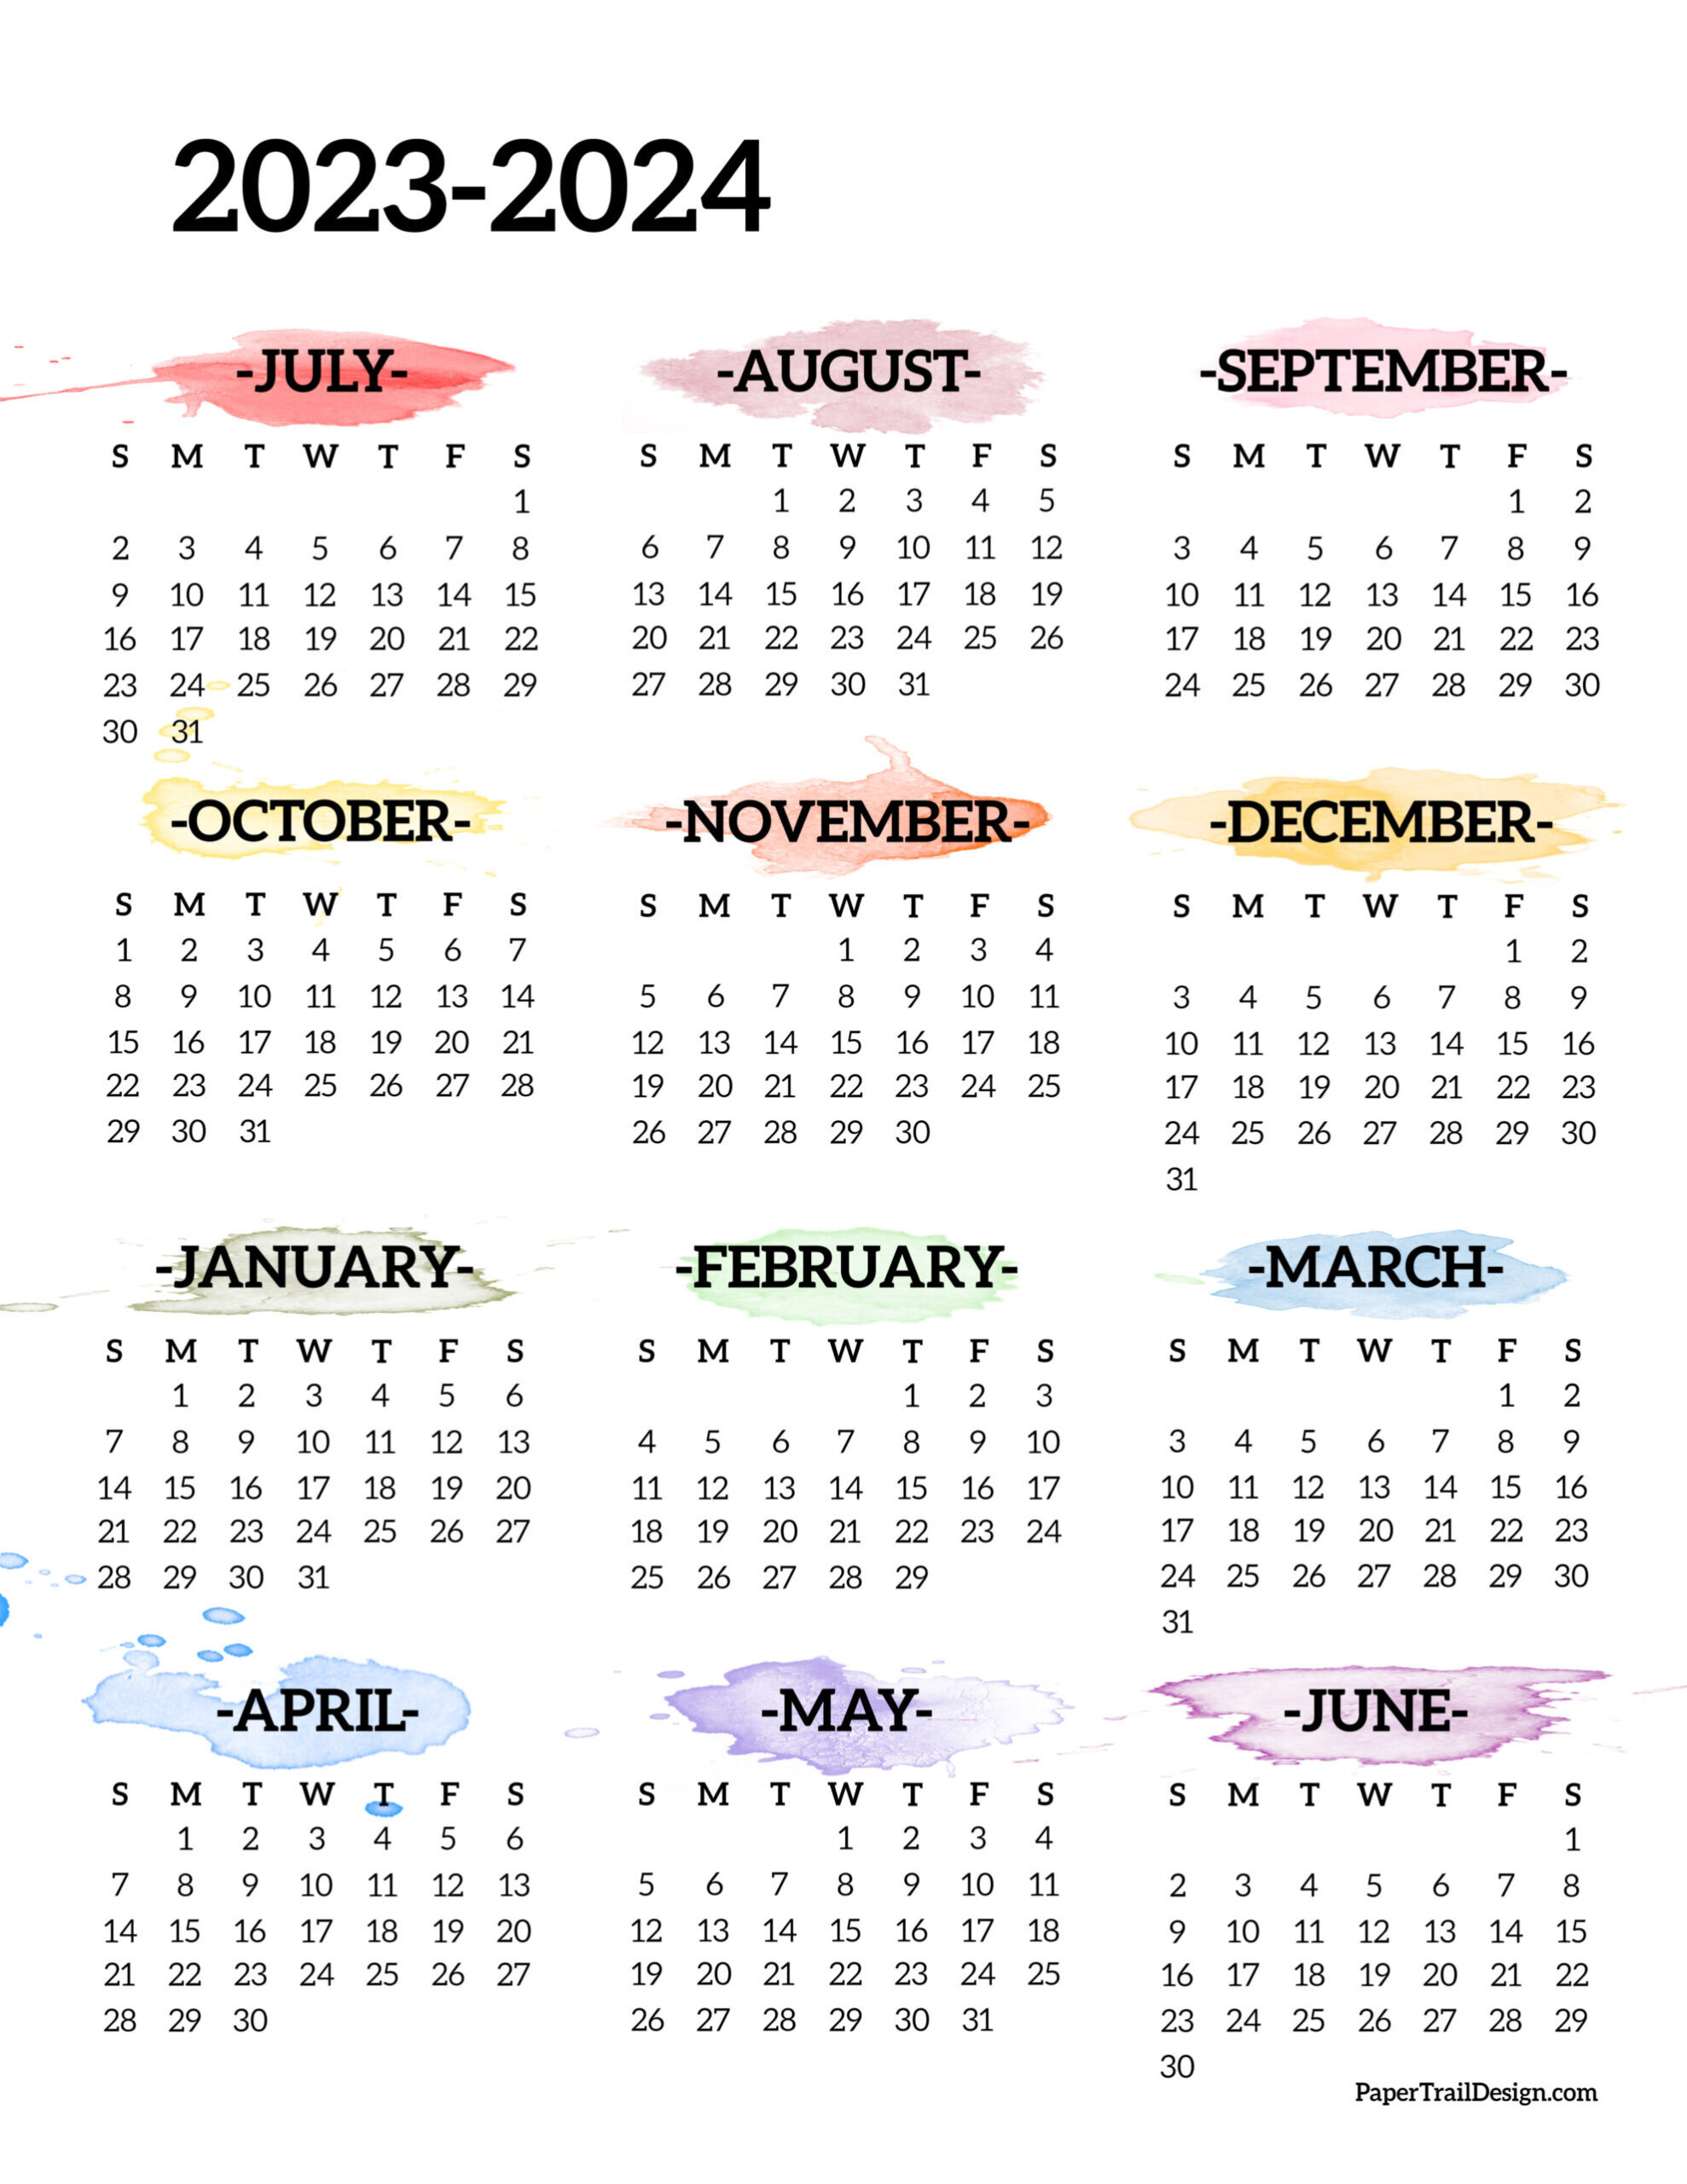 2023-2024 School Year Calendar Free Printable - Paper Trail Design in Academic Calendar August 2023 To July 2024